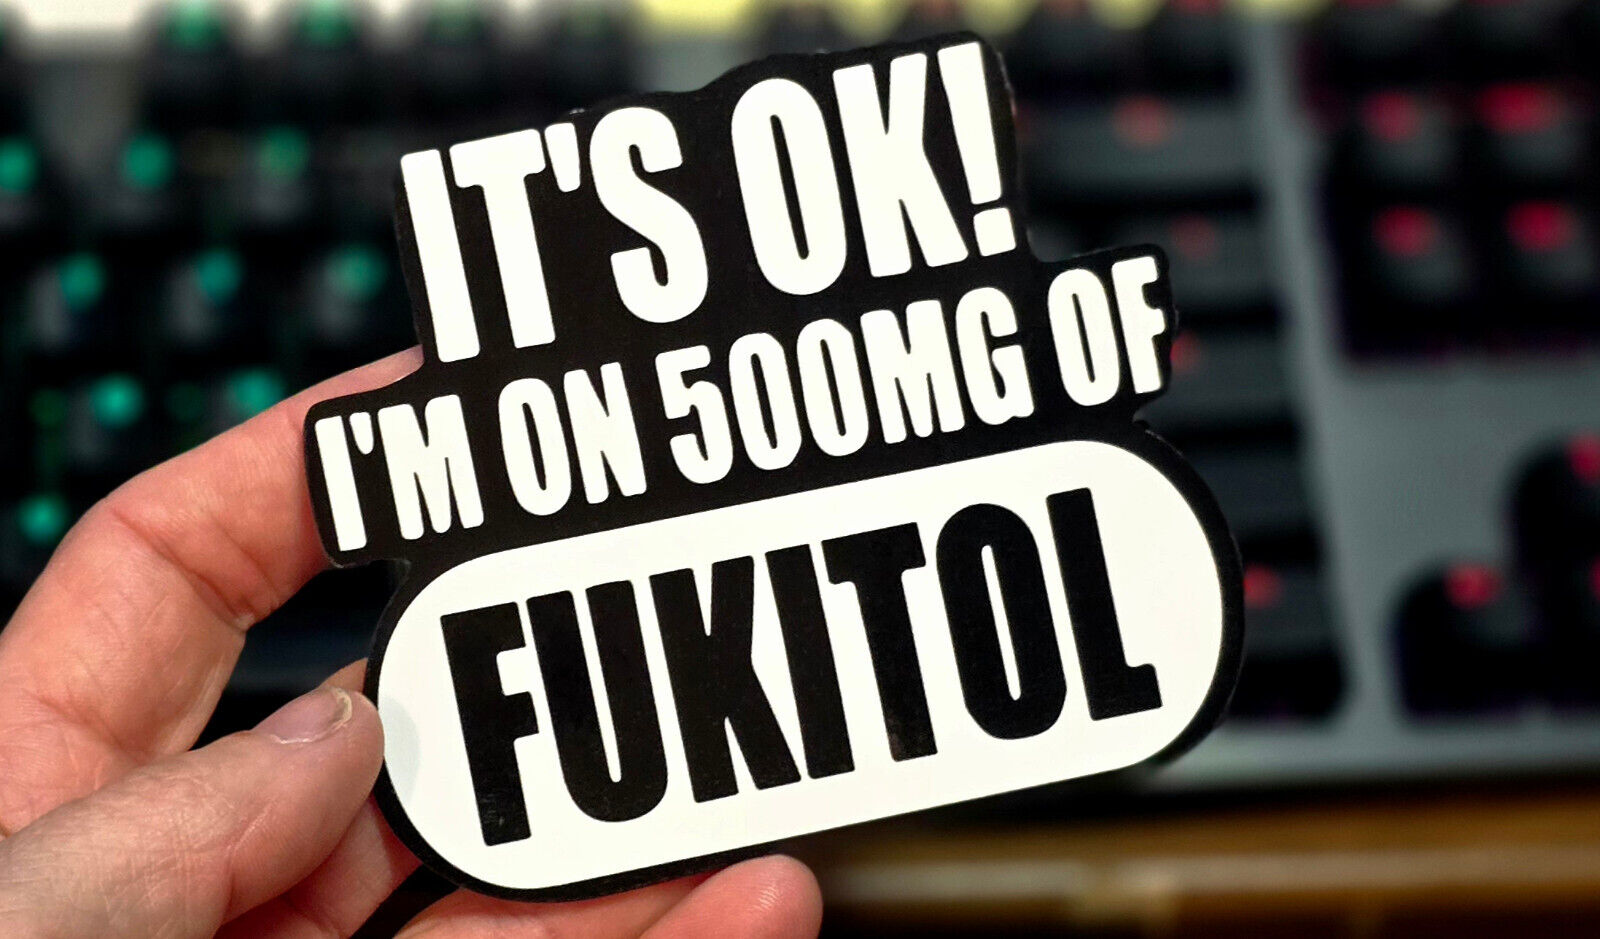 500Mg of Fukitol Funny Vinyl Sticker Gag Gift Tumbler Sticker Hard Hat Sticker